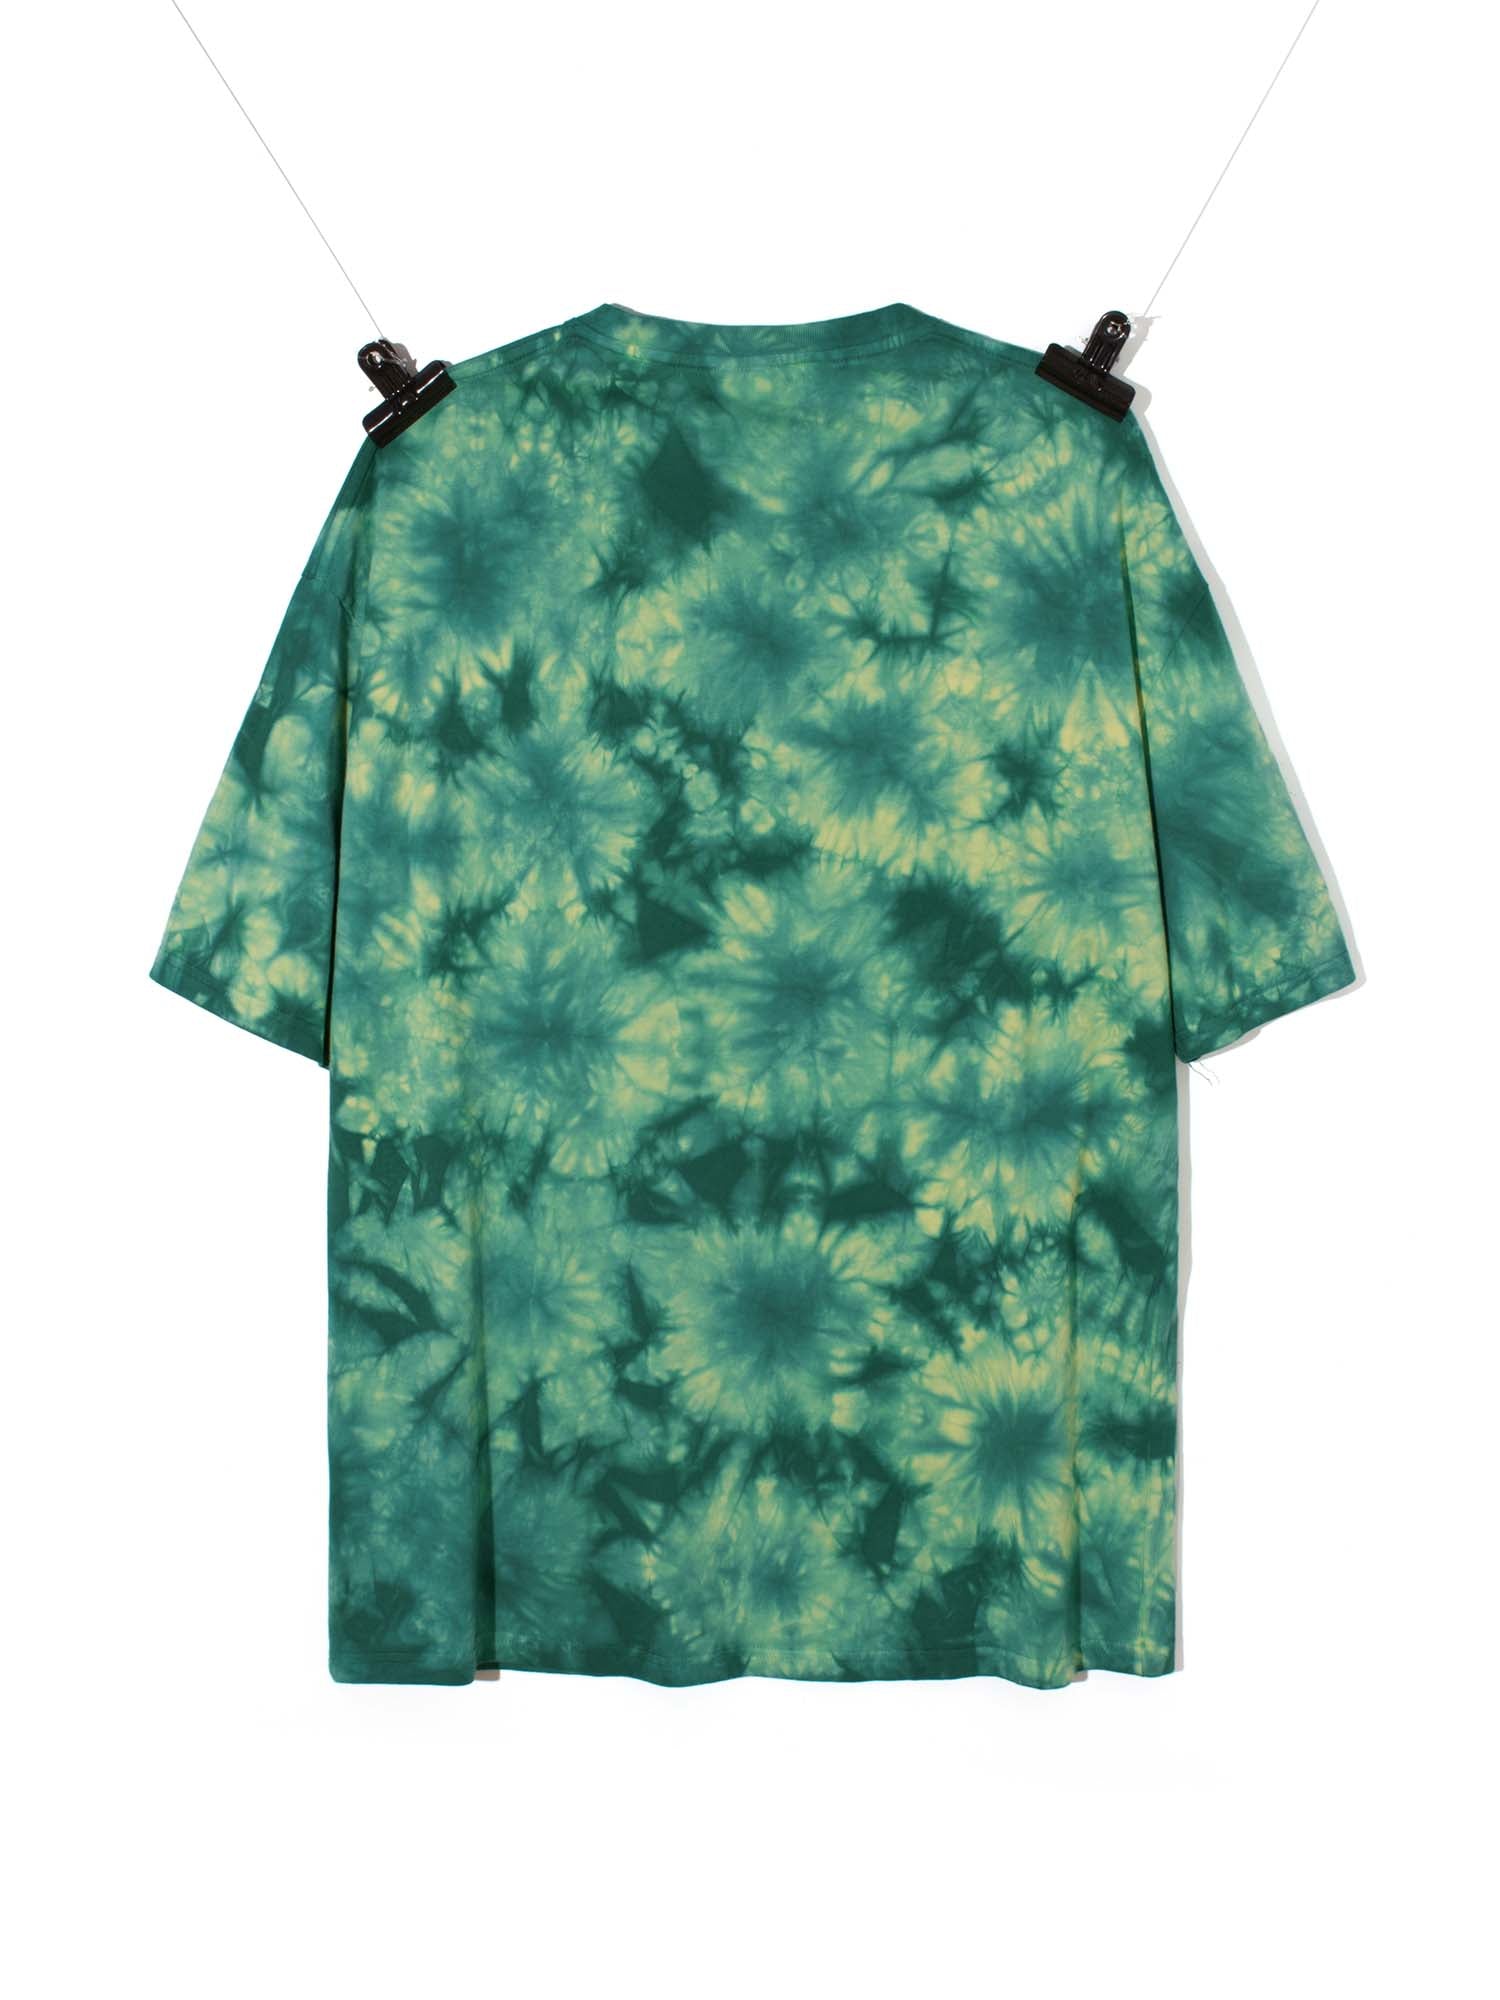 JUSTNOTAG Green forest Iridescent 100% Cotton Short Sleeve Tee - Tie Dye